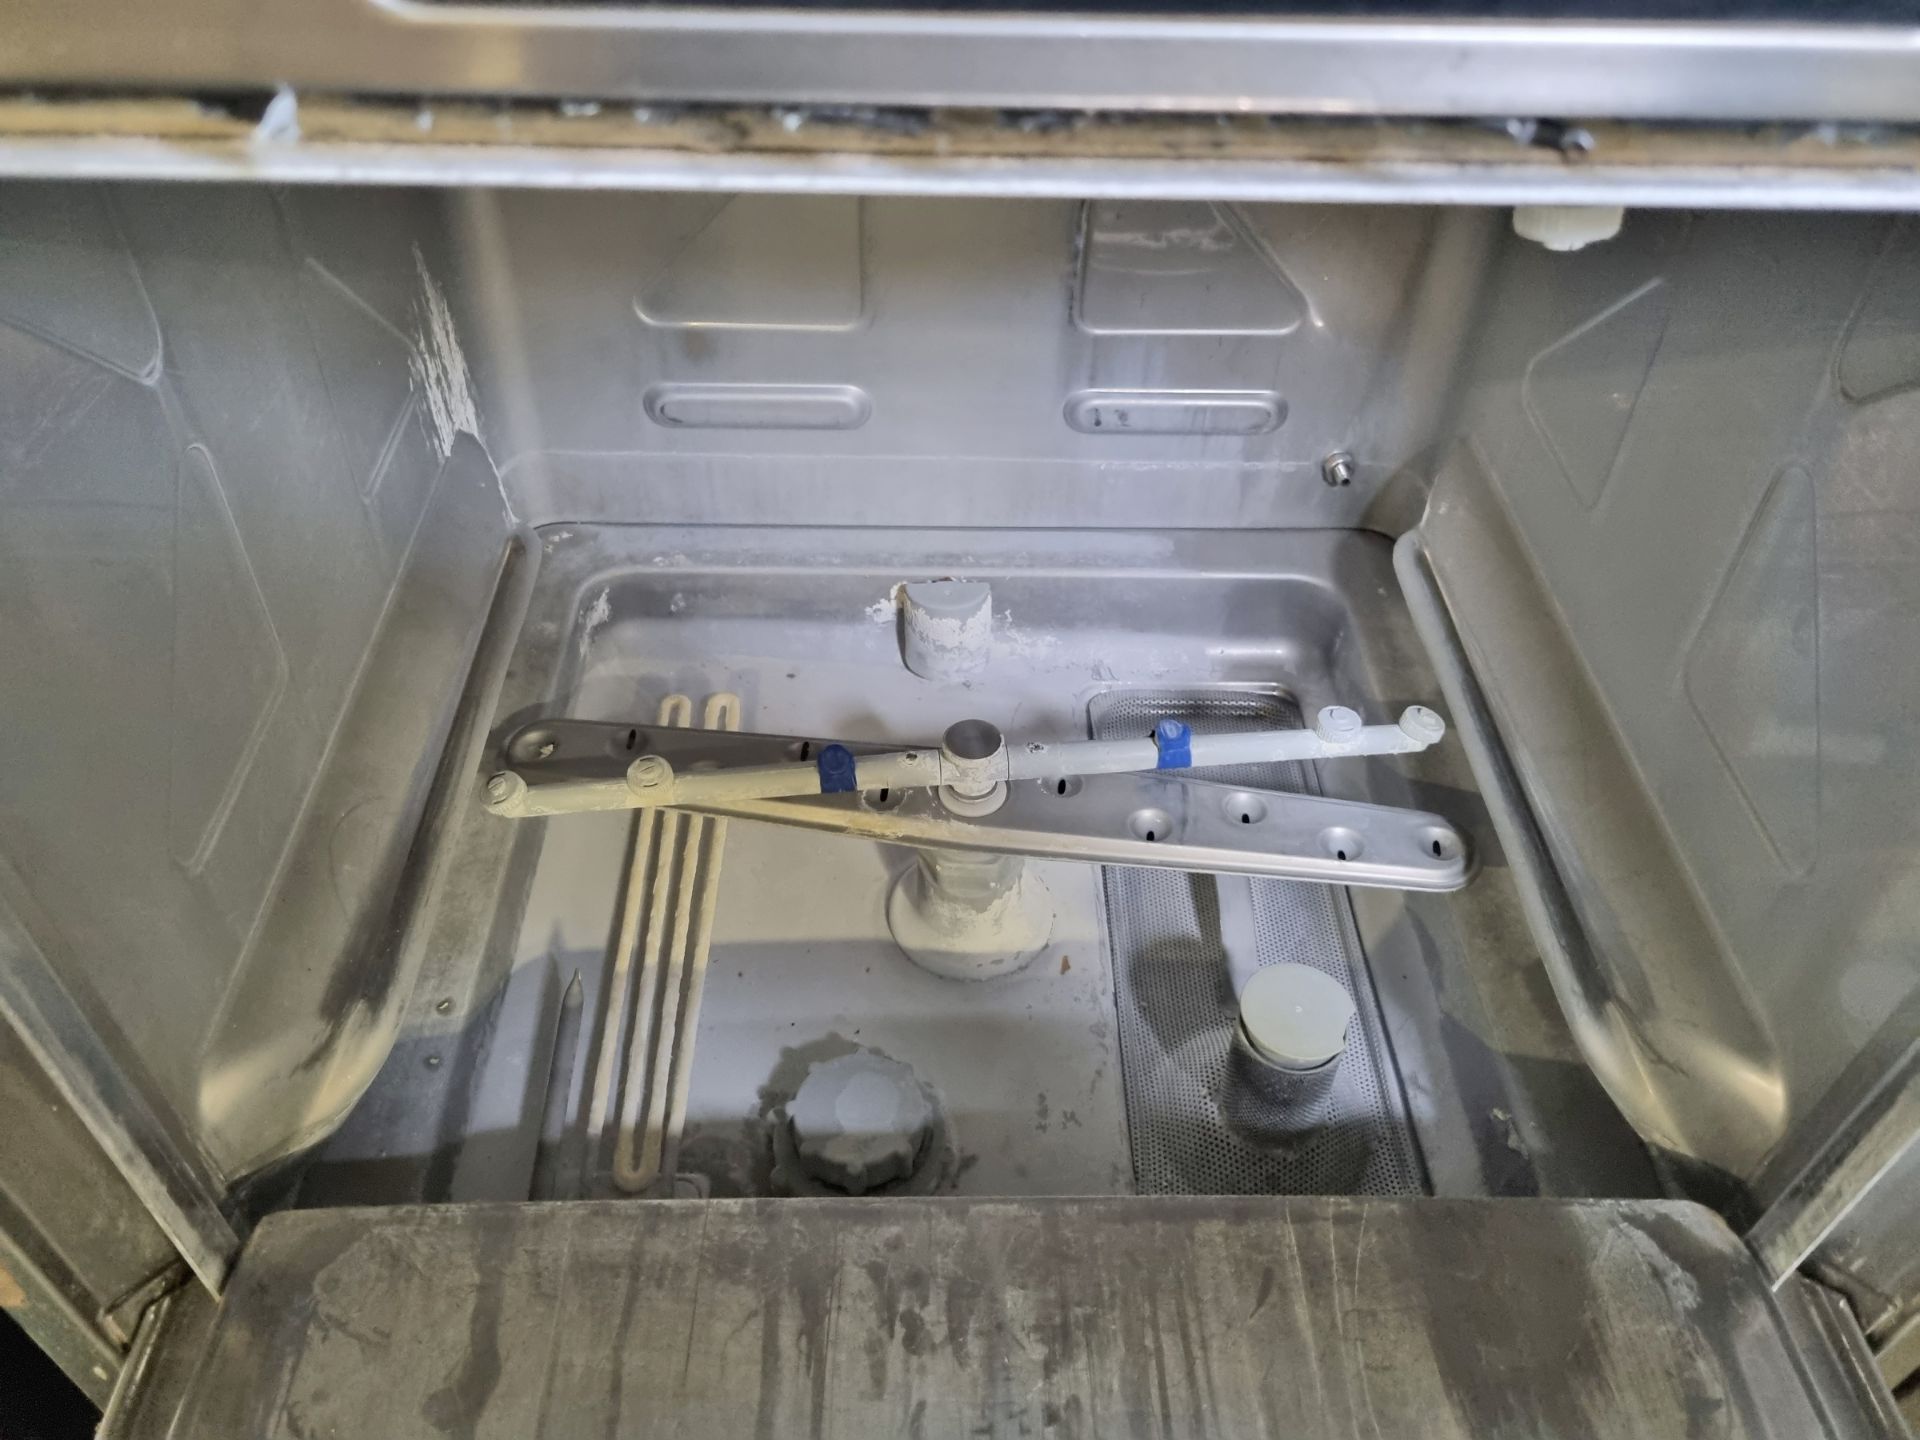 Jla Spirit DW15s stainless steel under counter dishwasher - 600mm W - Image 4 of 4